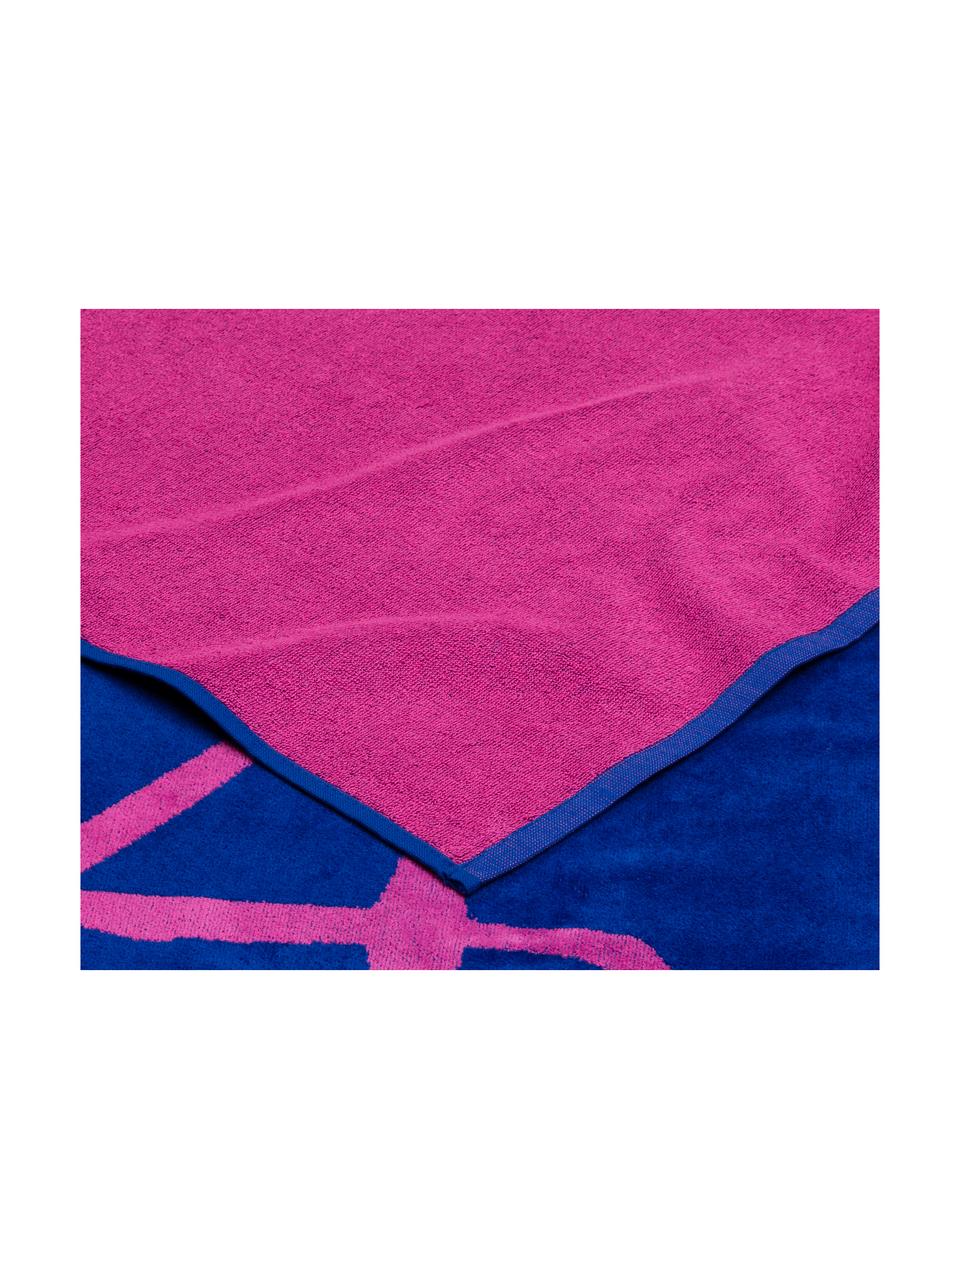 Plážová osuška Flamingo, Kobaltová modrá, ružová